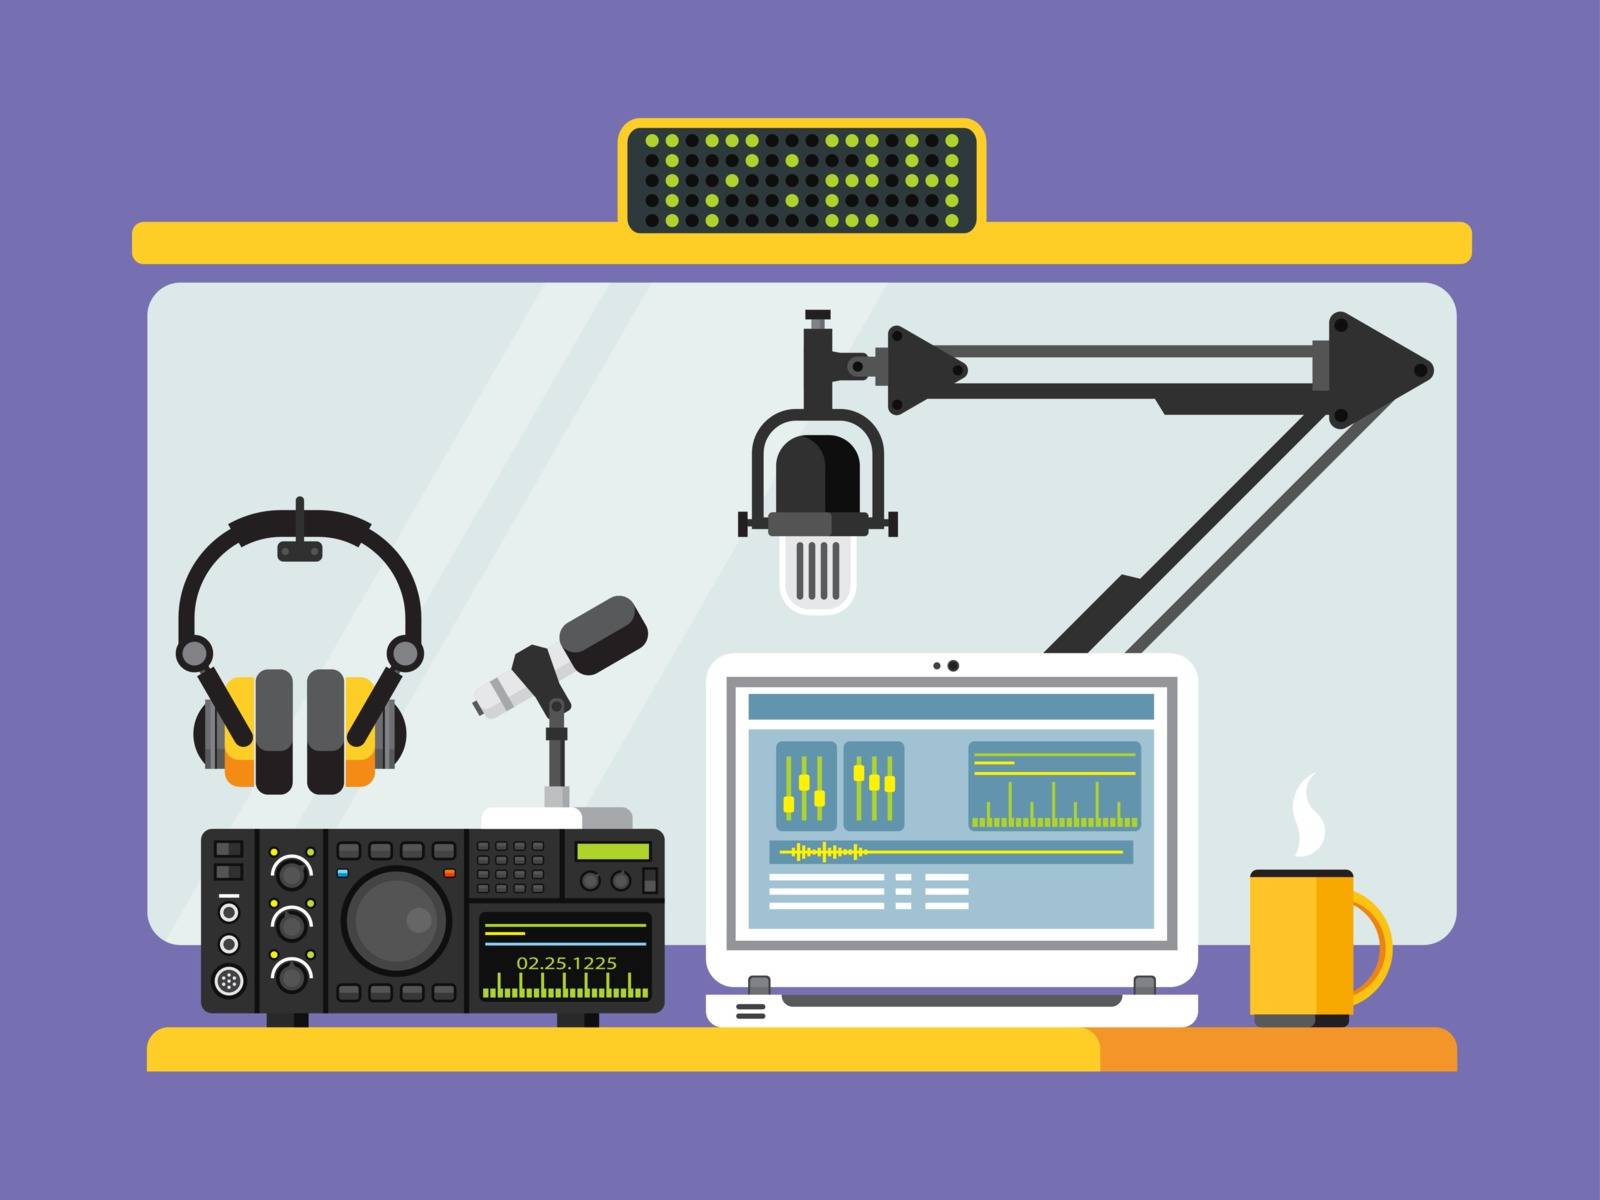 Professional radio station studio with microphones and headphones by jossdiim